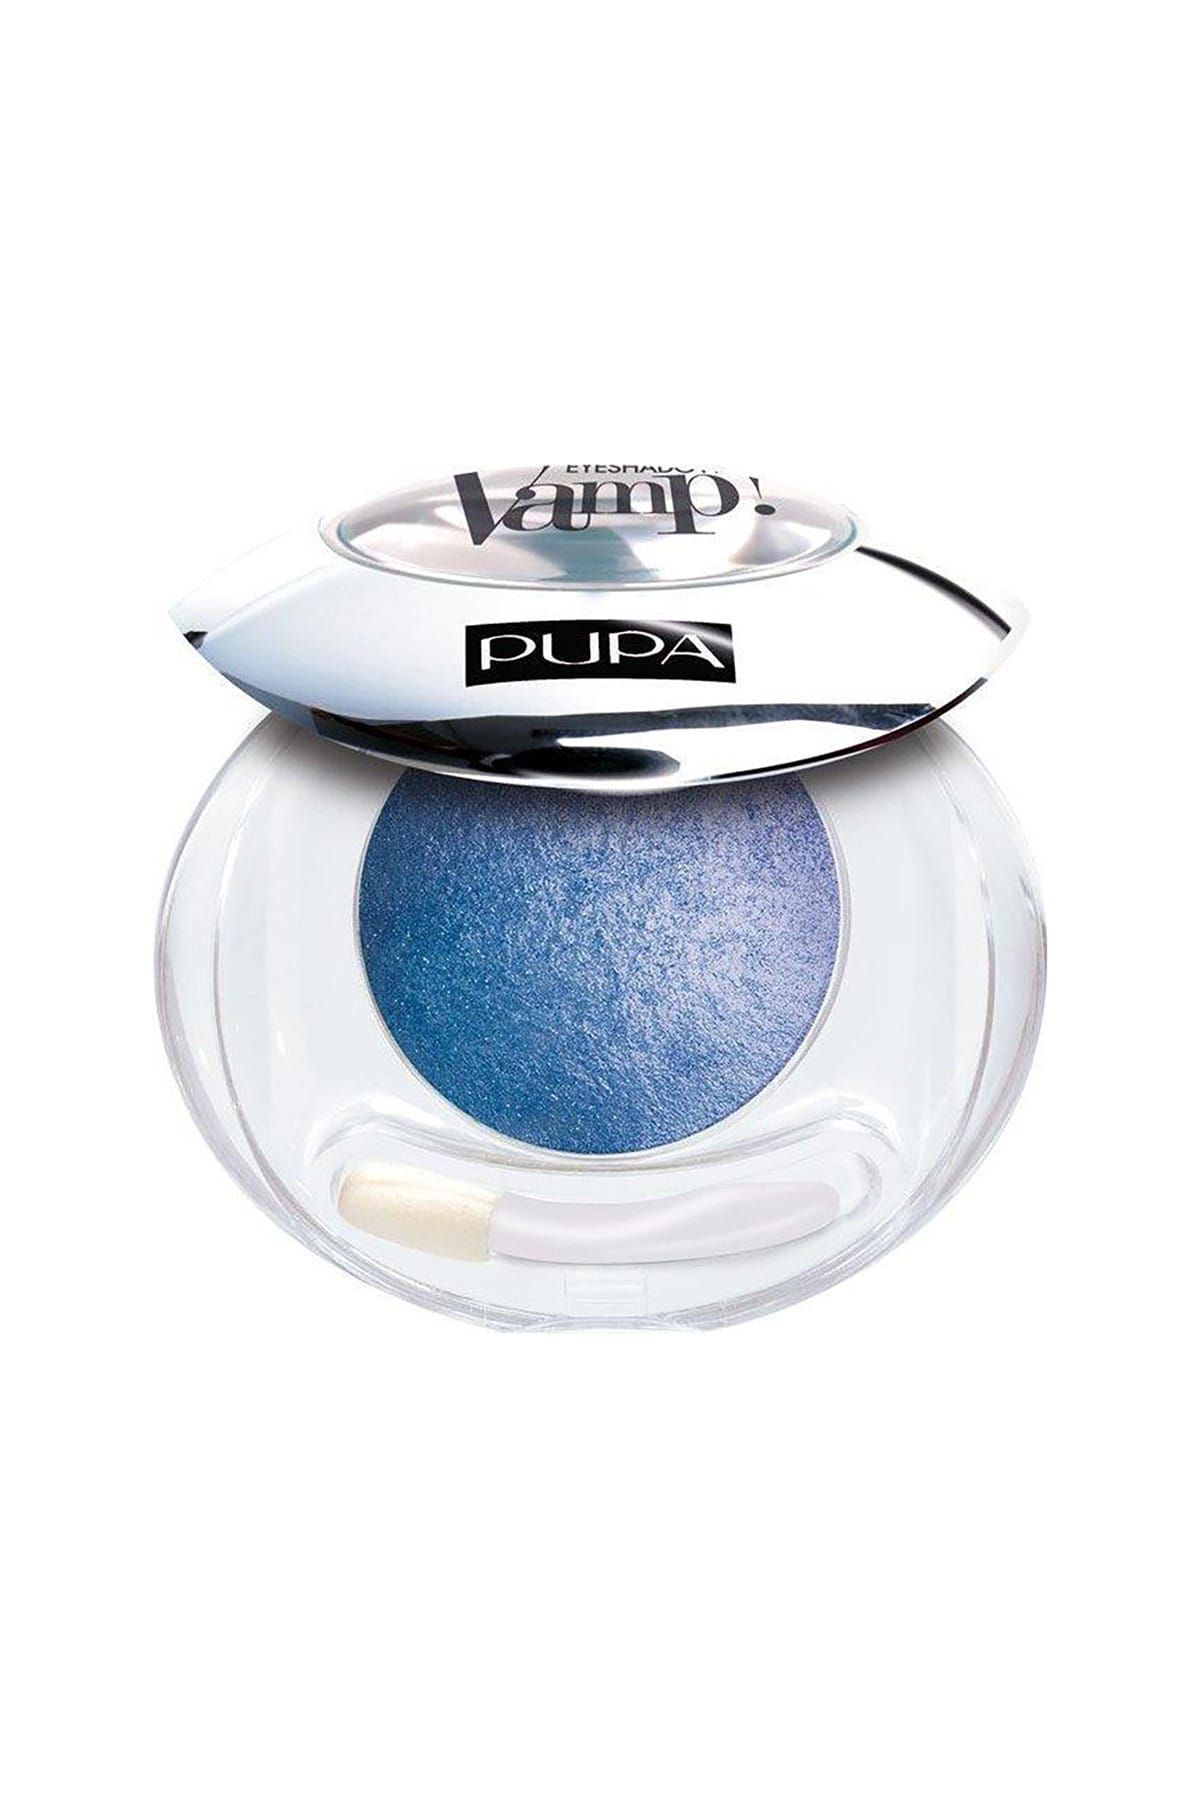 Pupa Milano Göz Farı - Vamp Wet Dry Eyeshadow 304 Indigo Blue 8011607203741